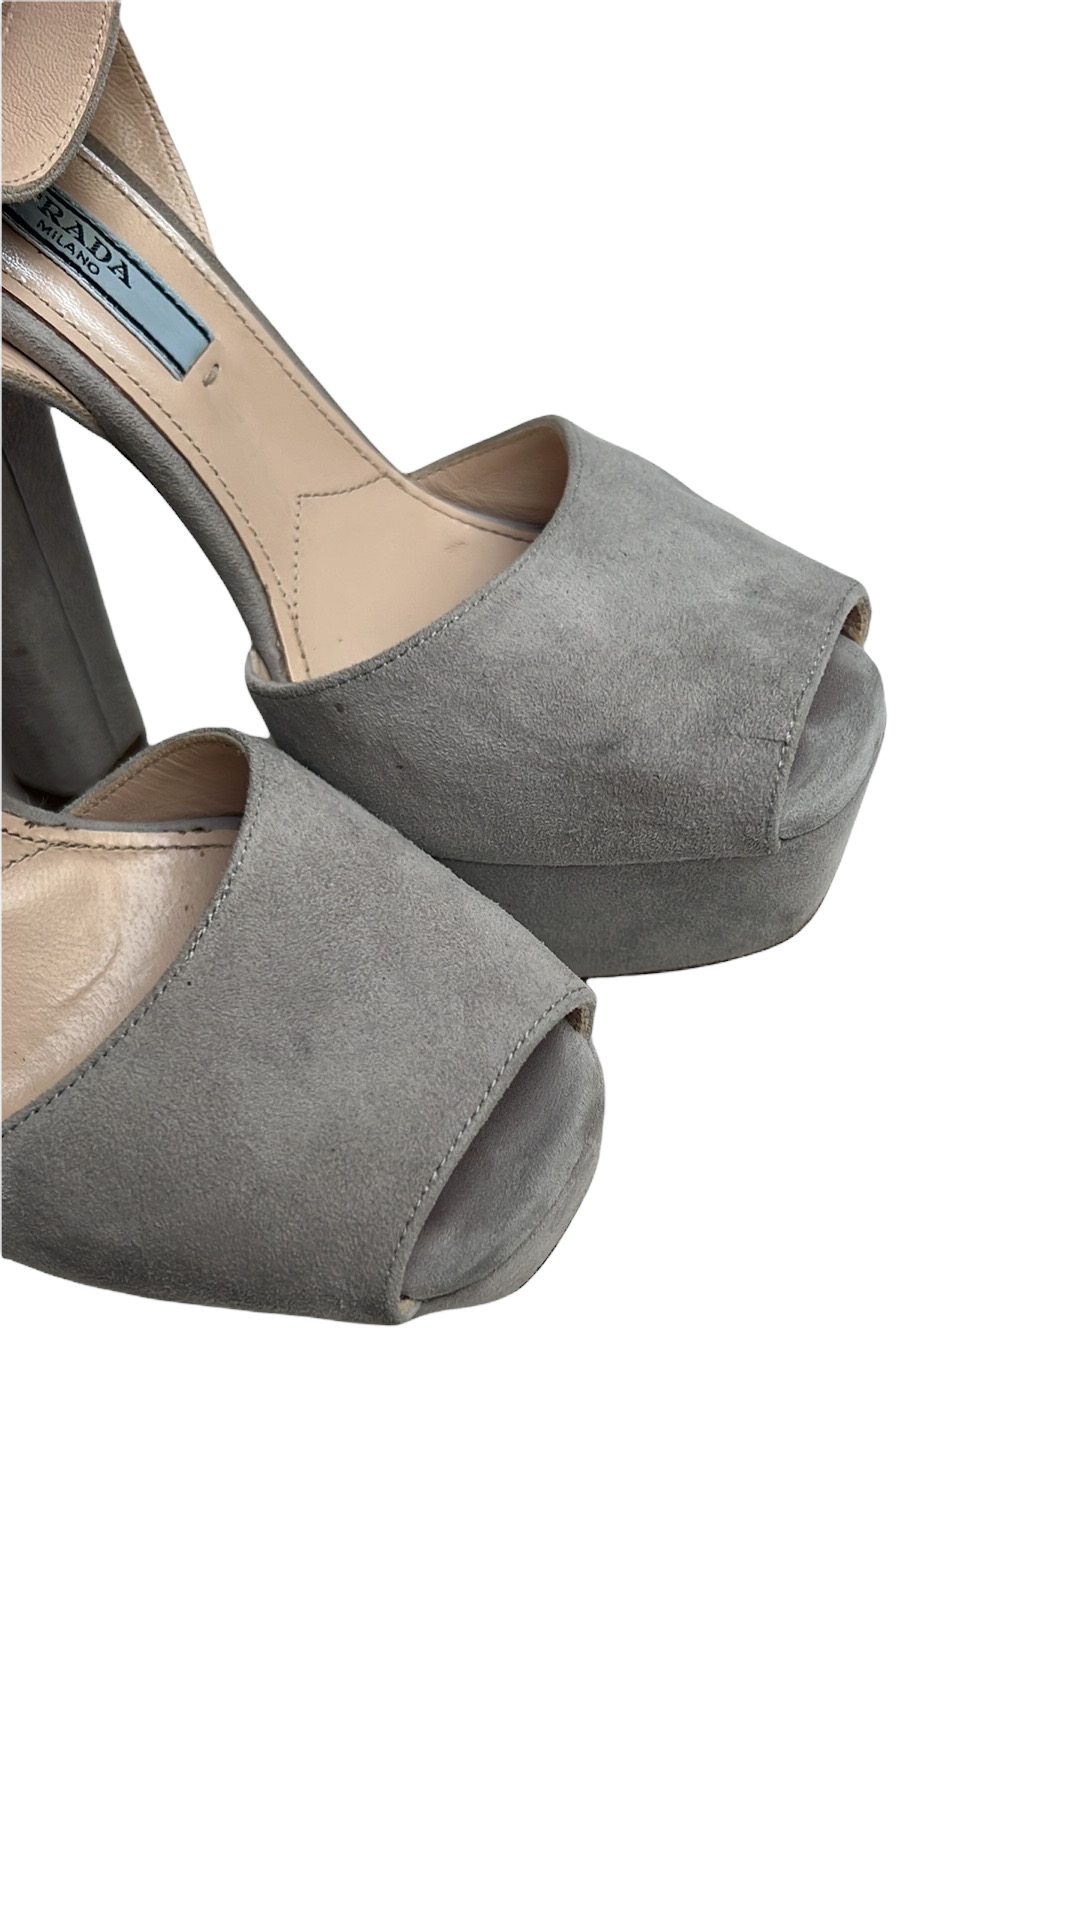 Pearl Grey Suede Platform Heels - 5.5